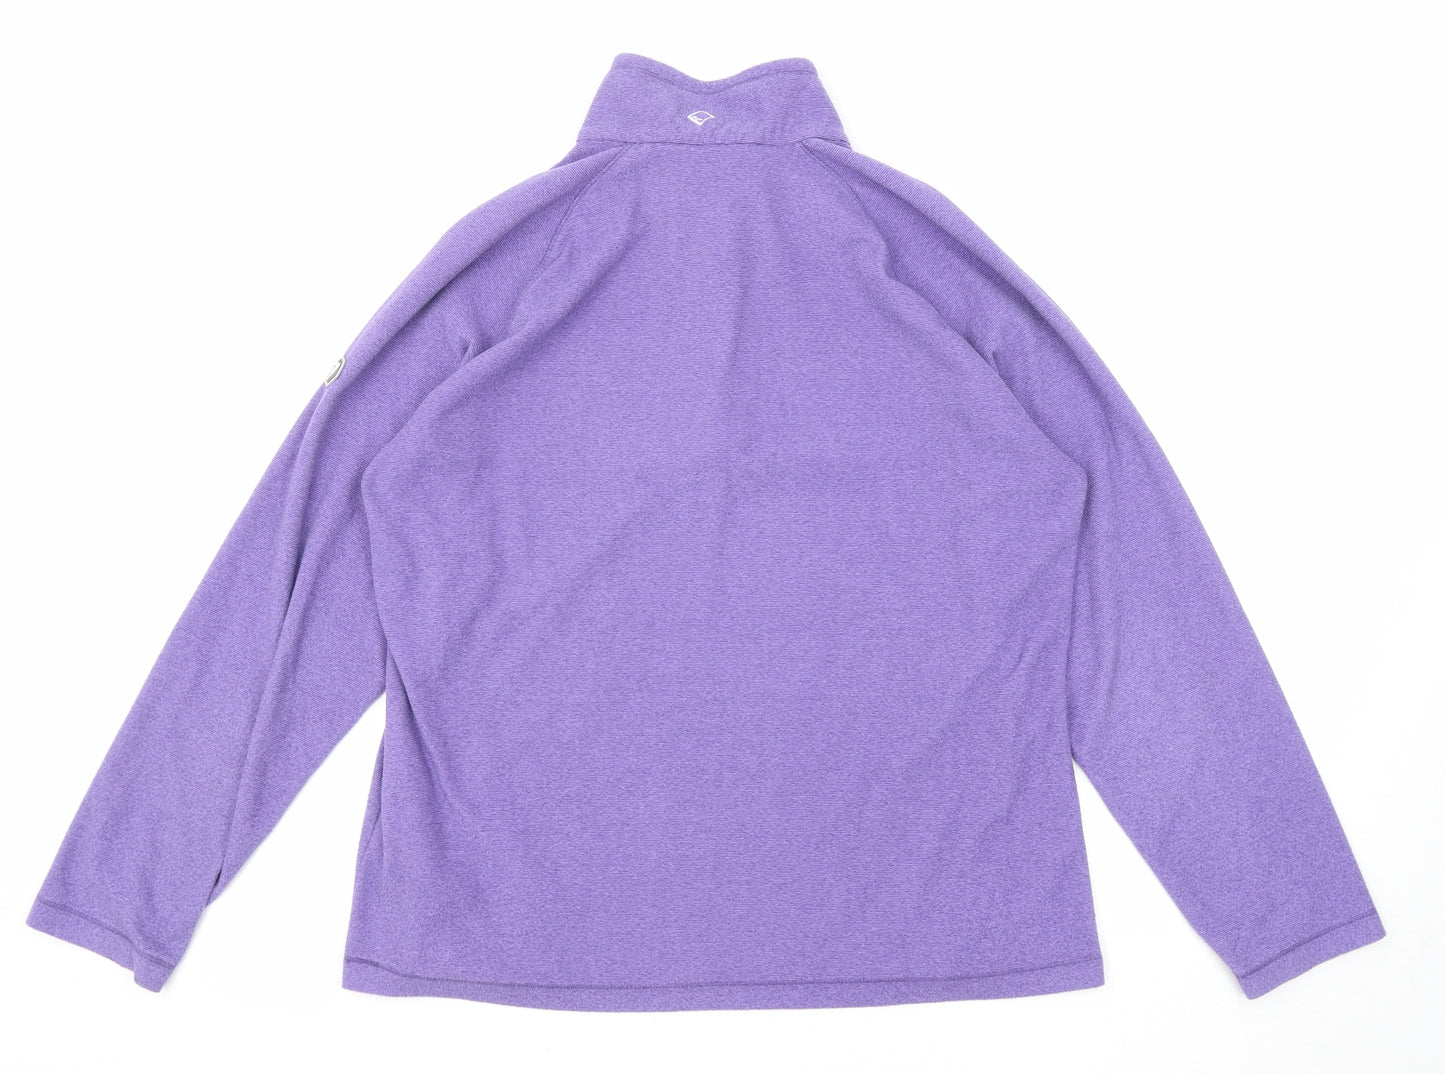 Regatta Womens Purple Polyester Pullover Sweatshirt Size 16 Zip - Quarter-Zip